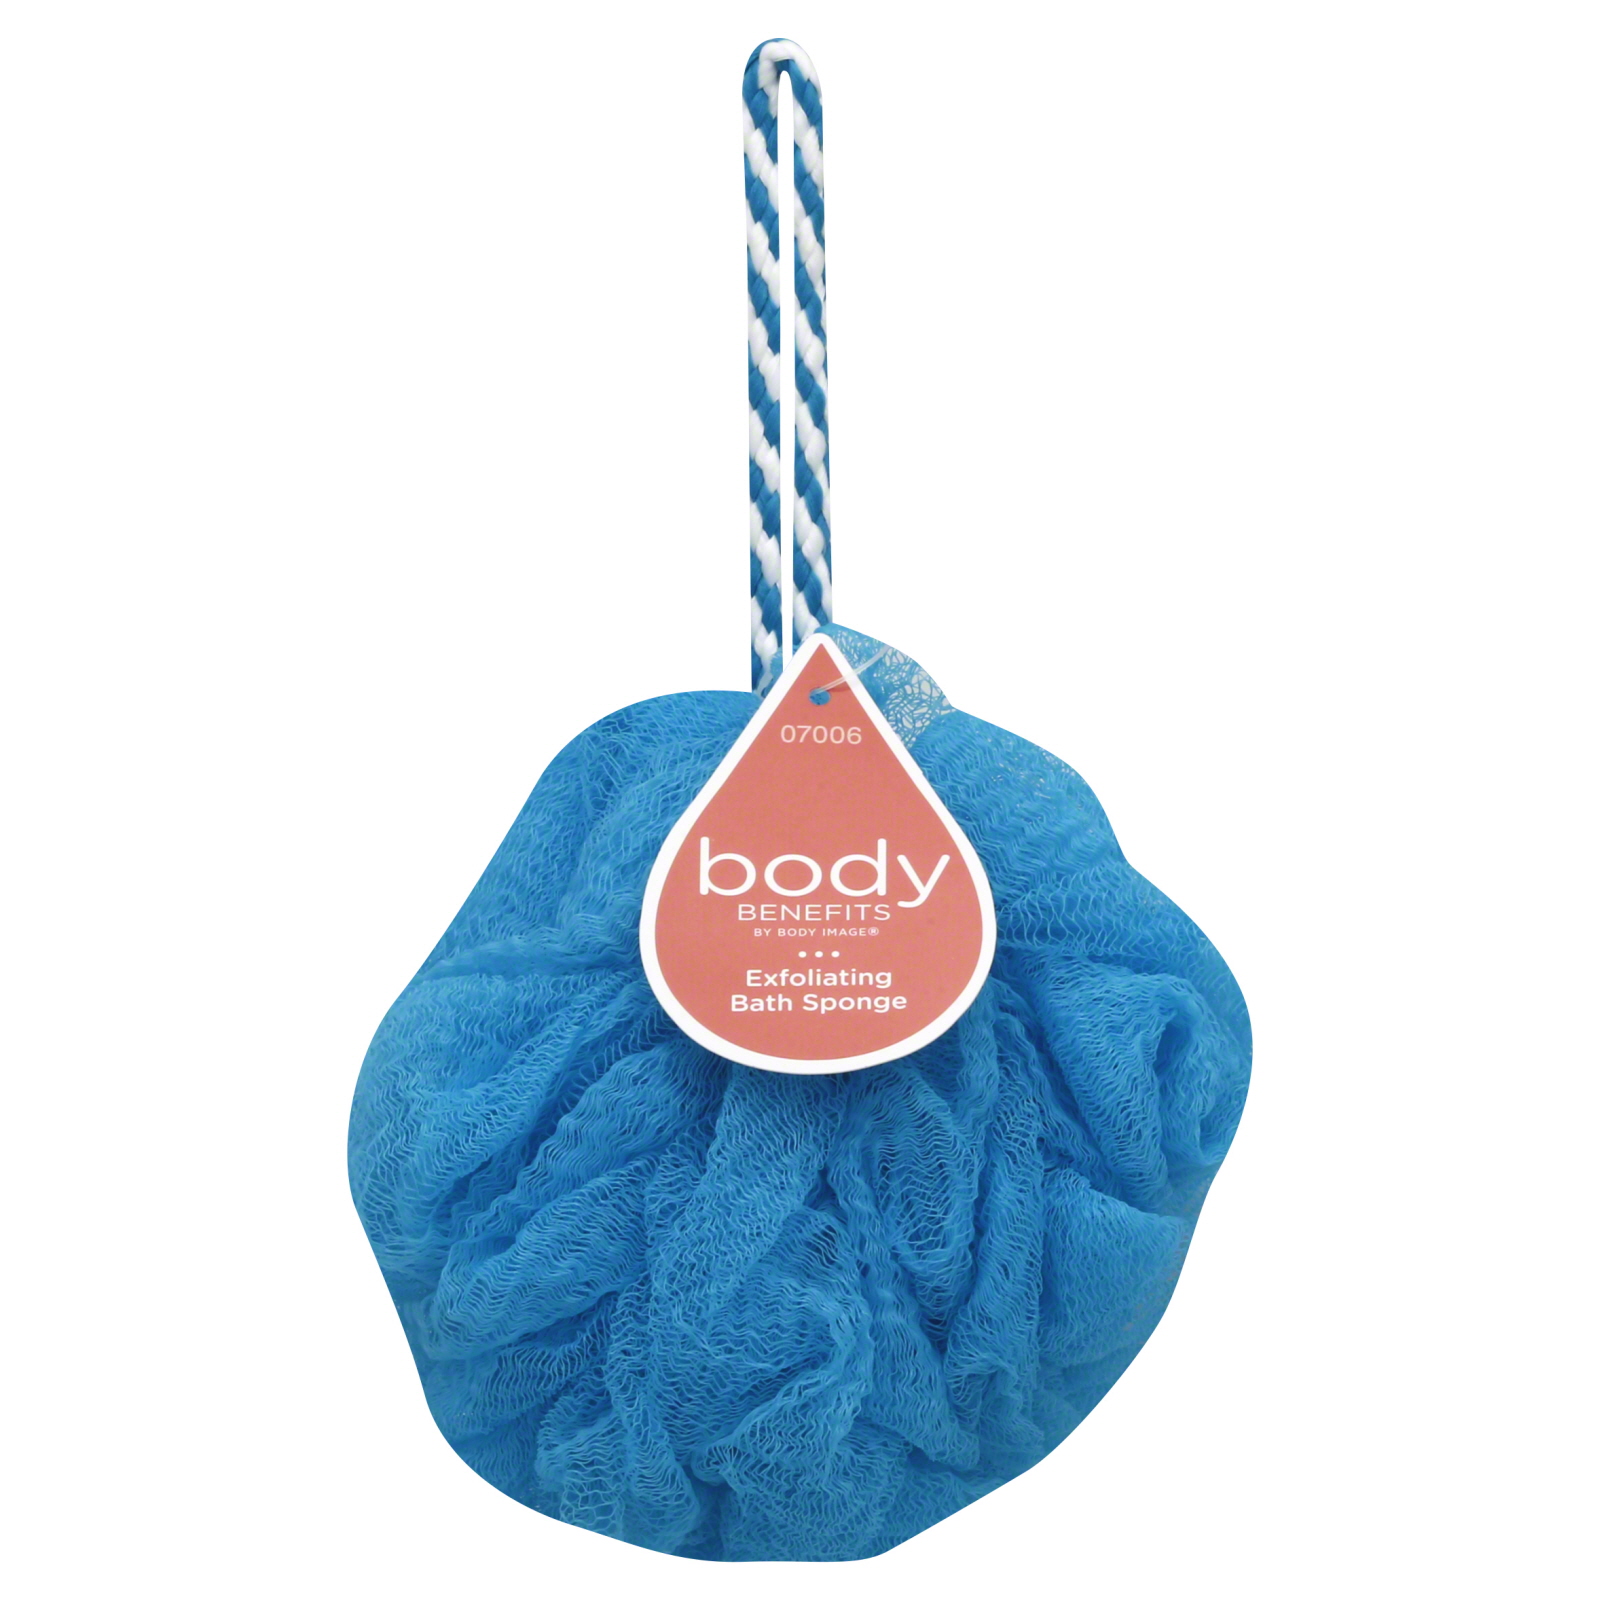 Body Benefits Body Image Bath Sponge, Exfoliating, 1 sponge